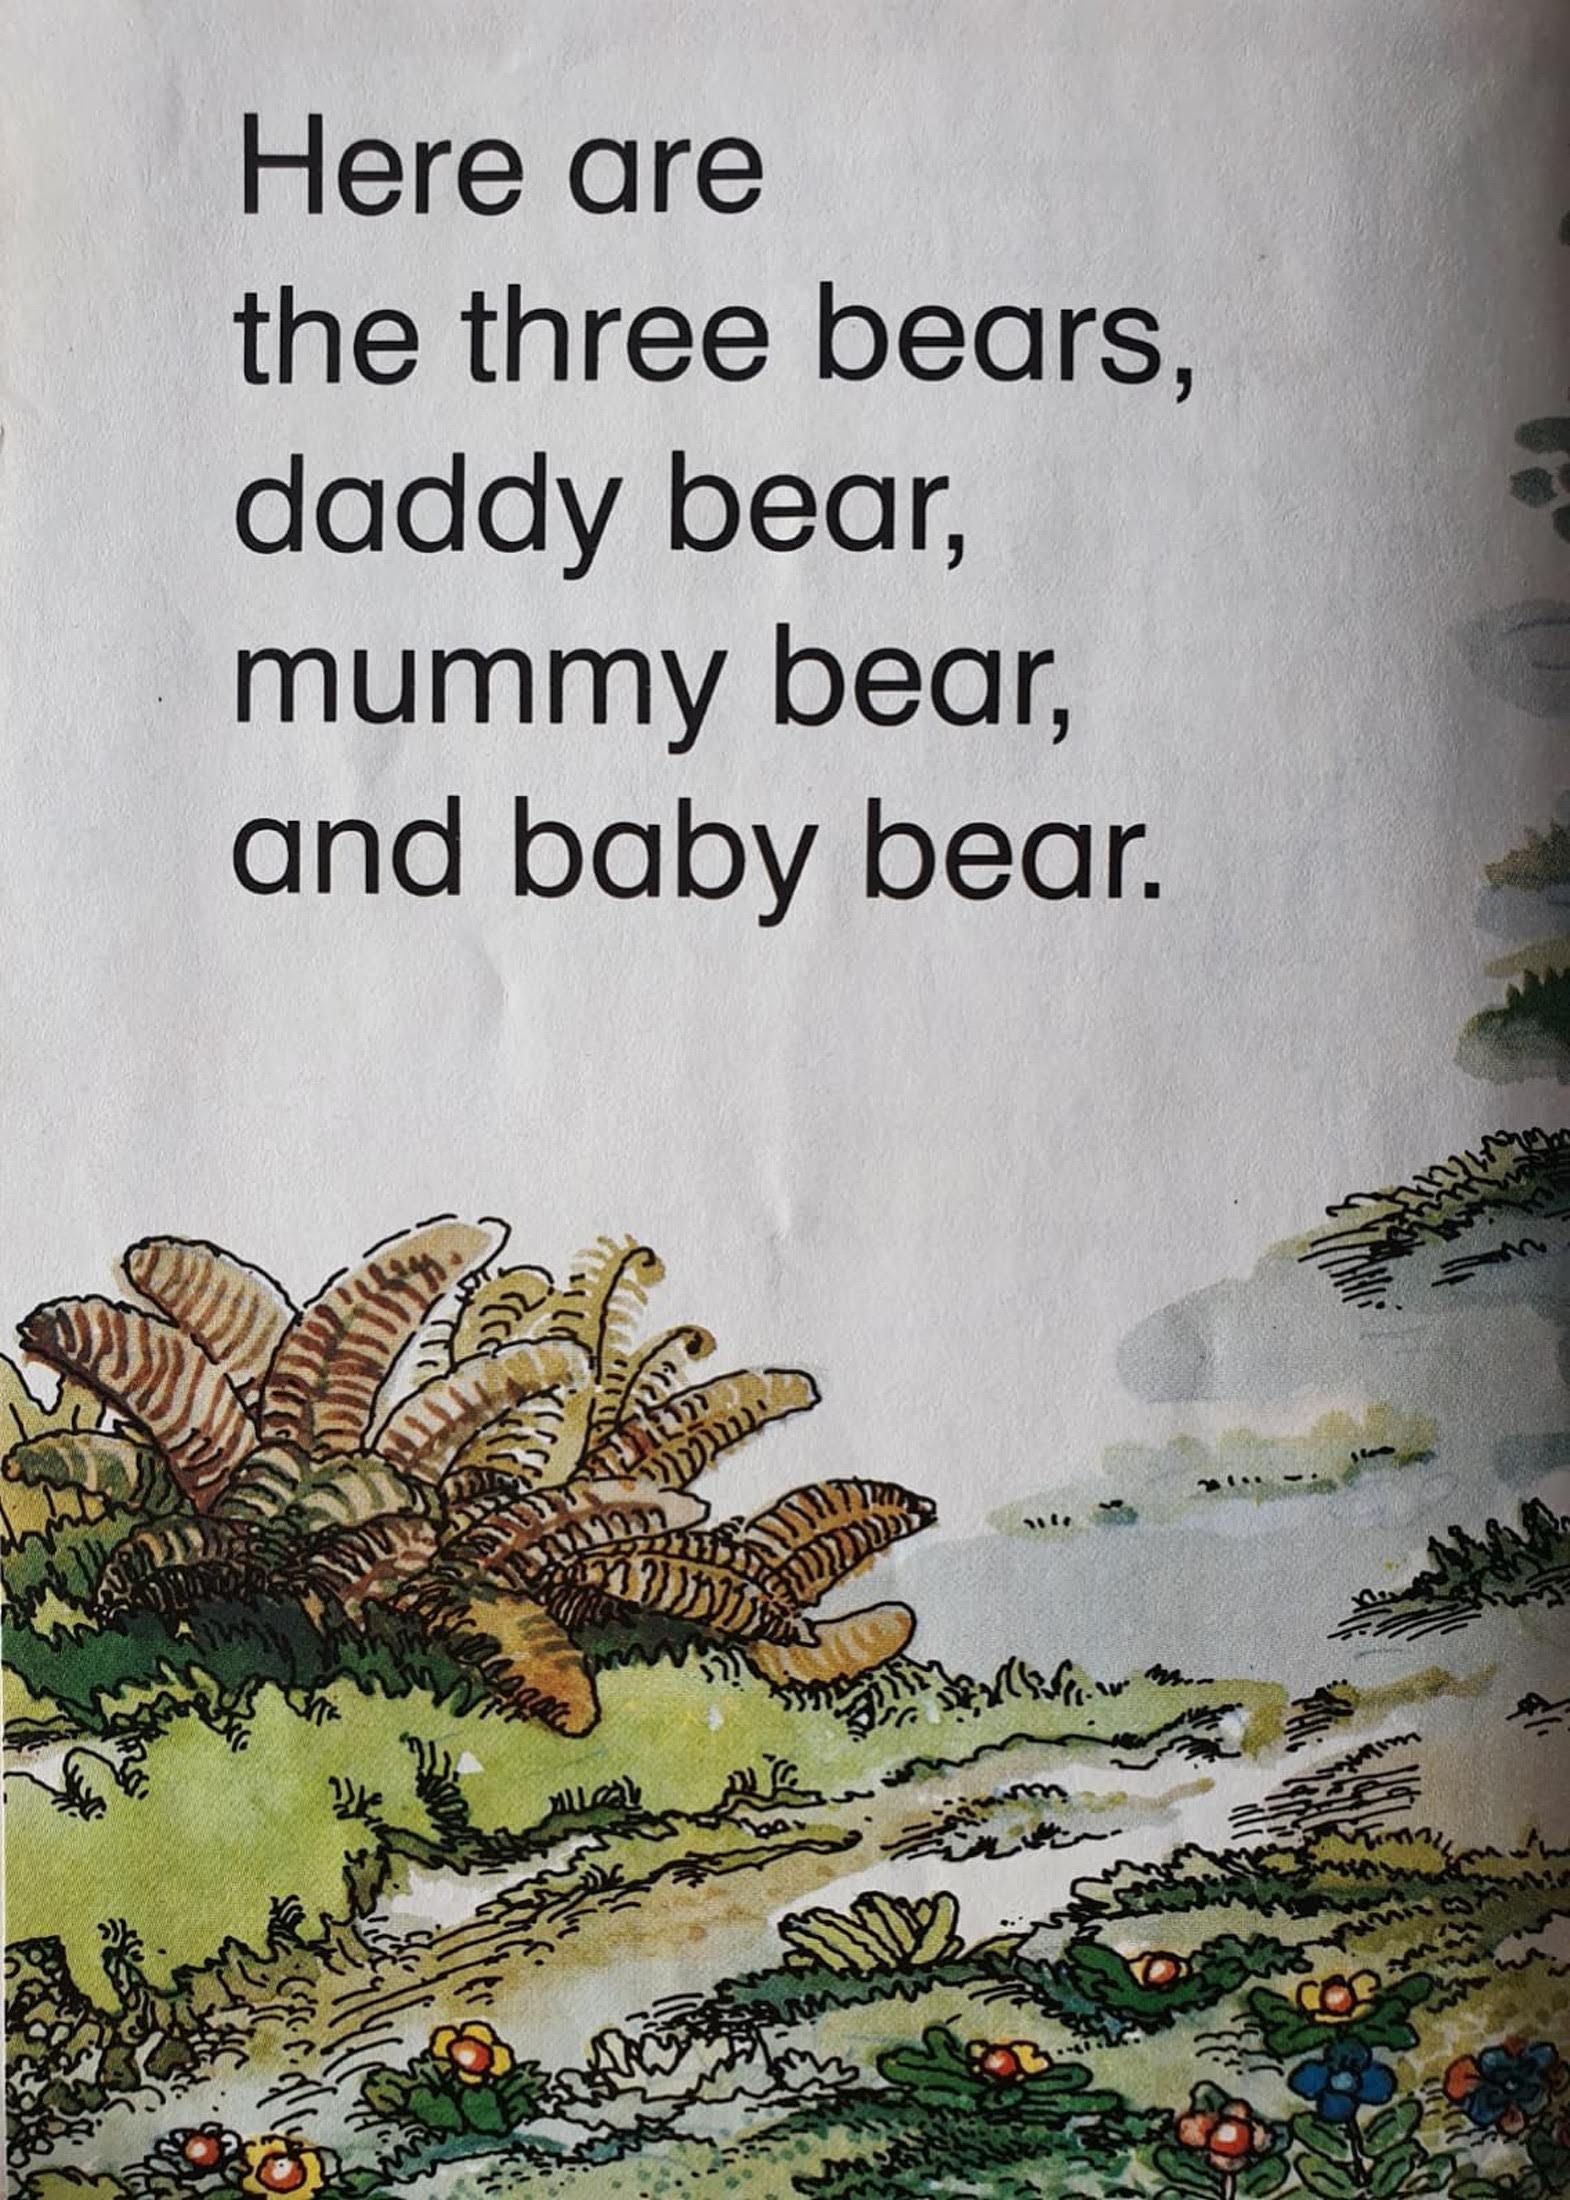 Goldilocks And The Three Bears Like New, 3-5 yrs Ladybird  (6333753688249)